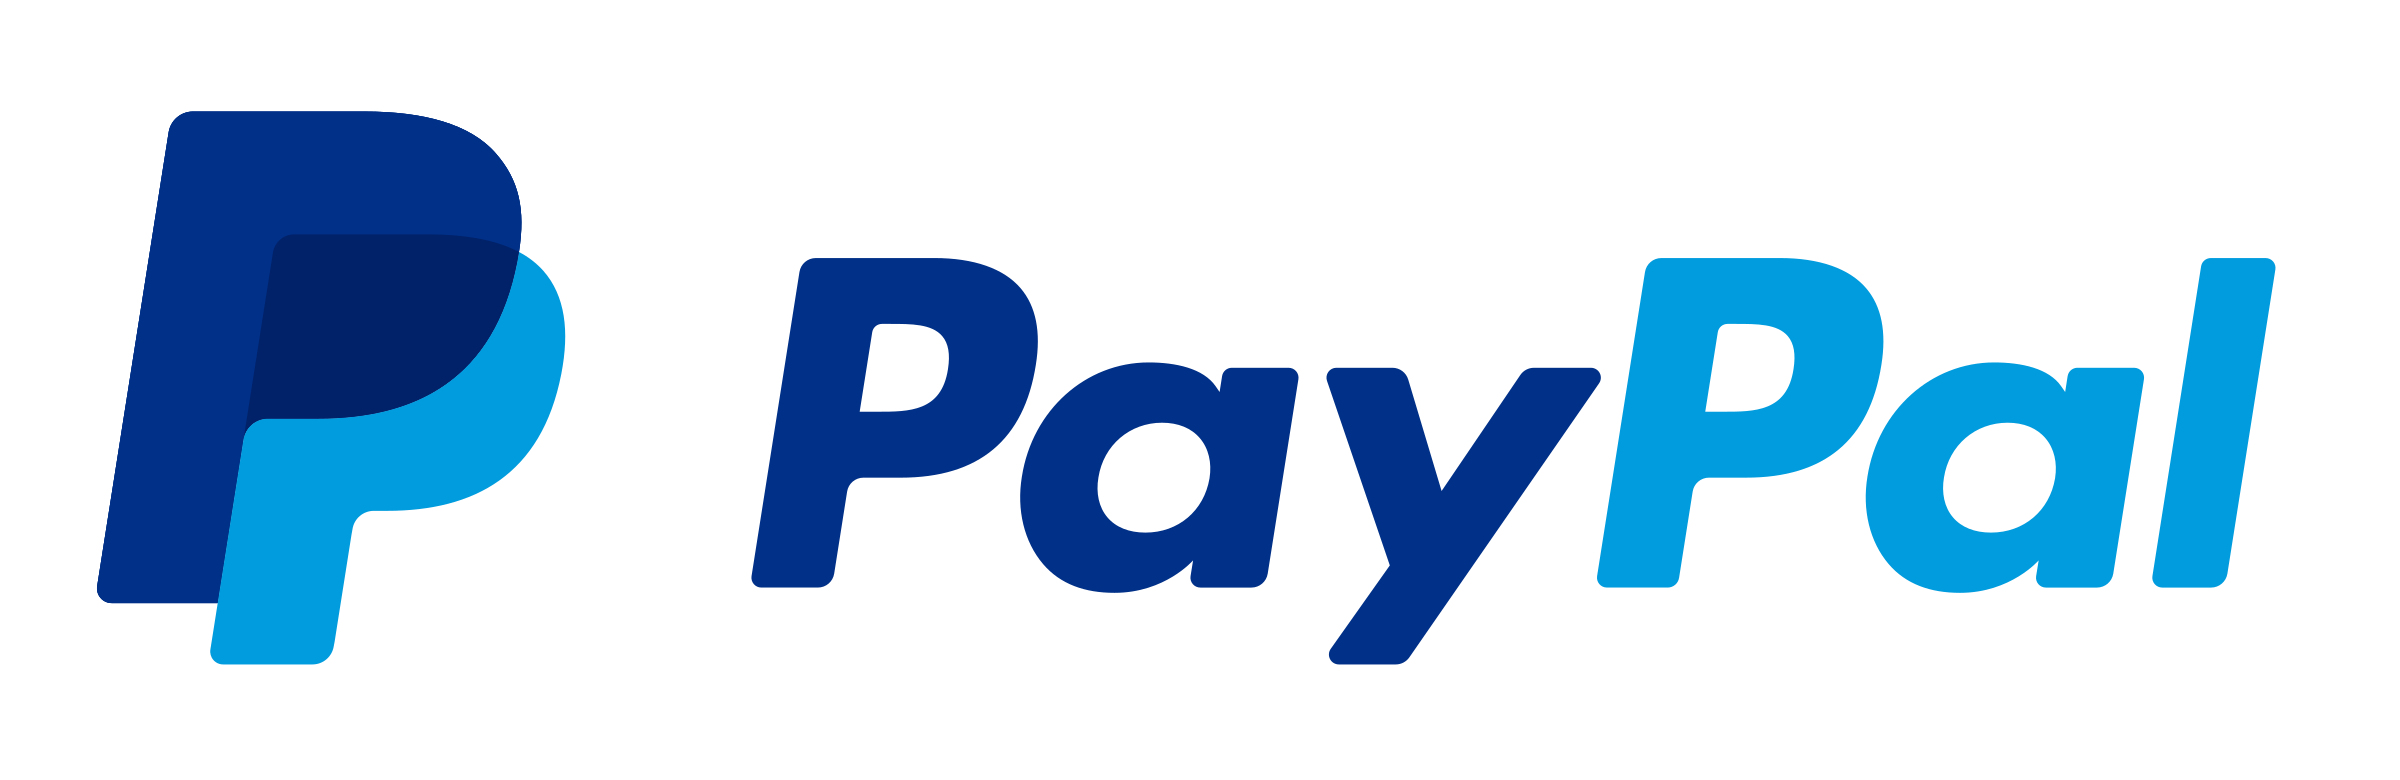 paypal-logo-png-transparent.png